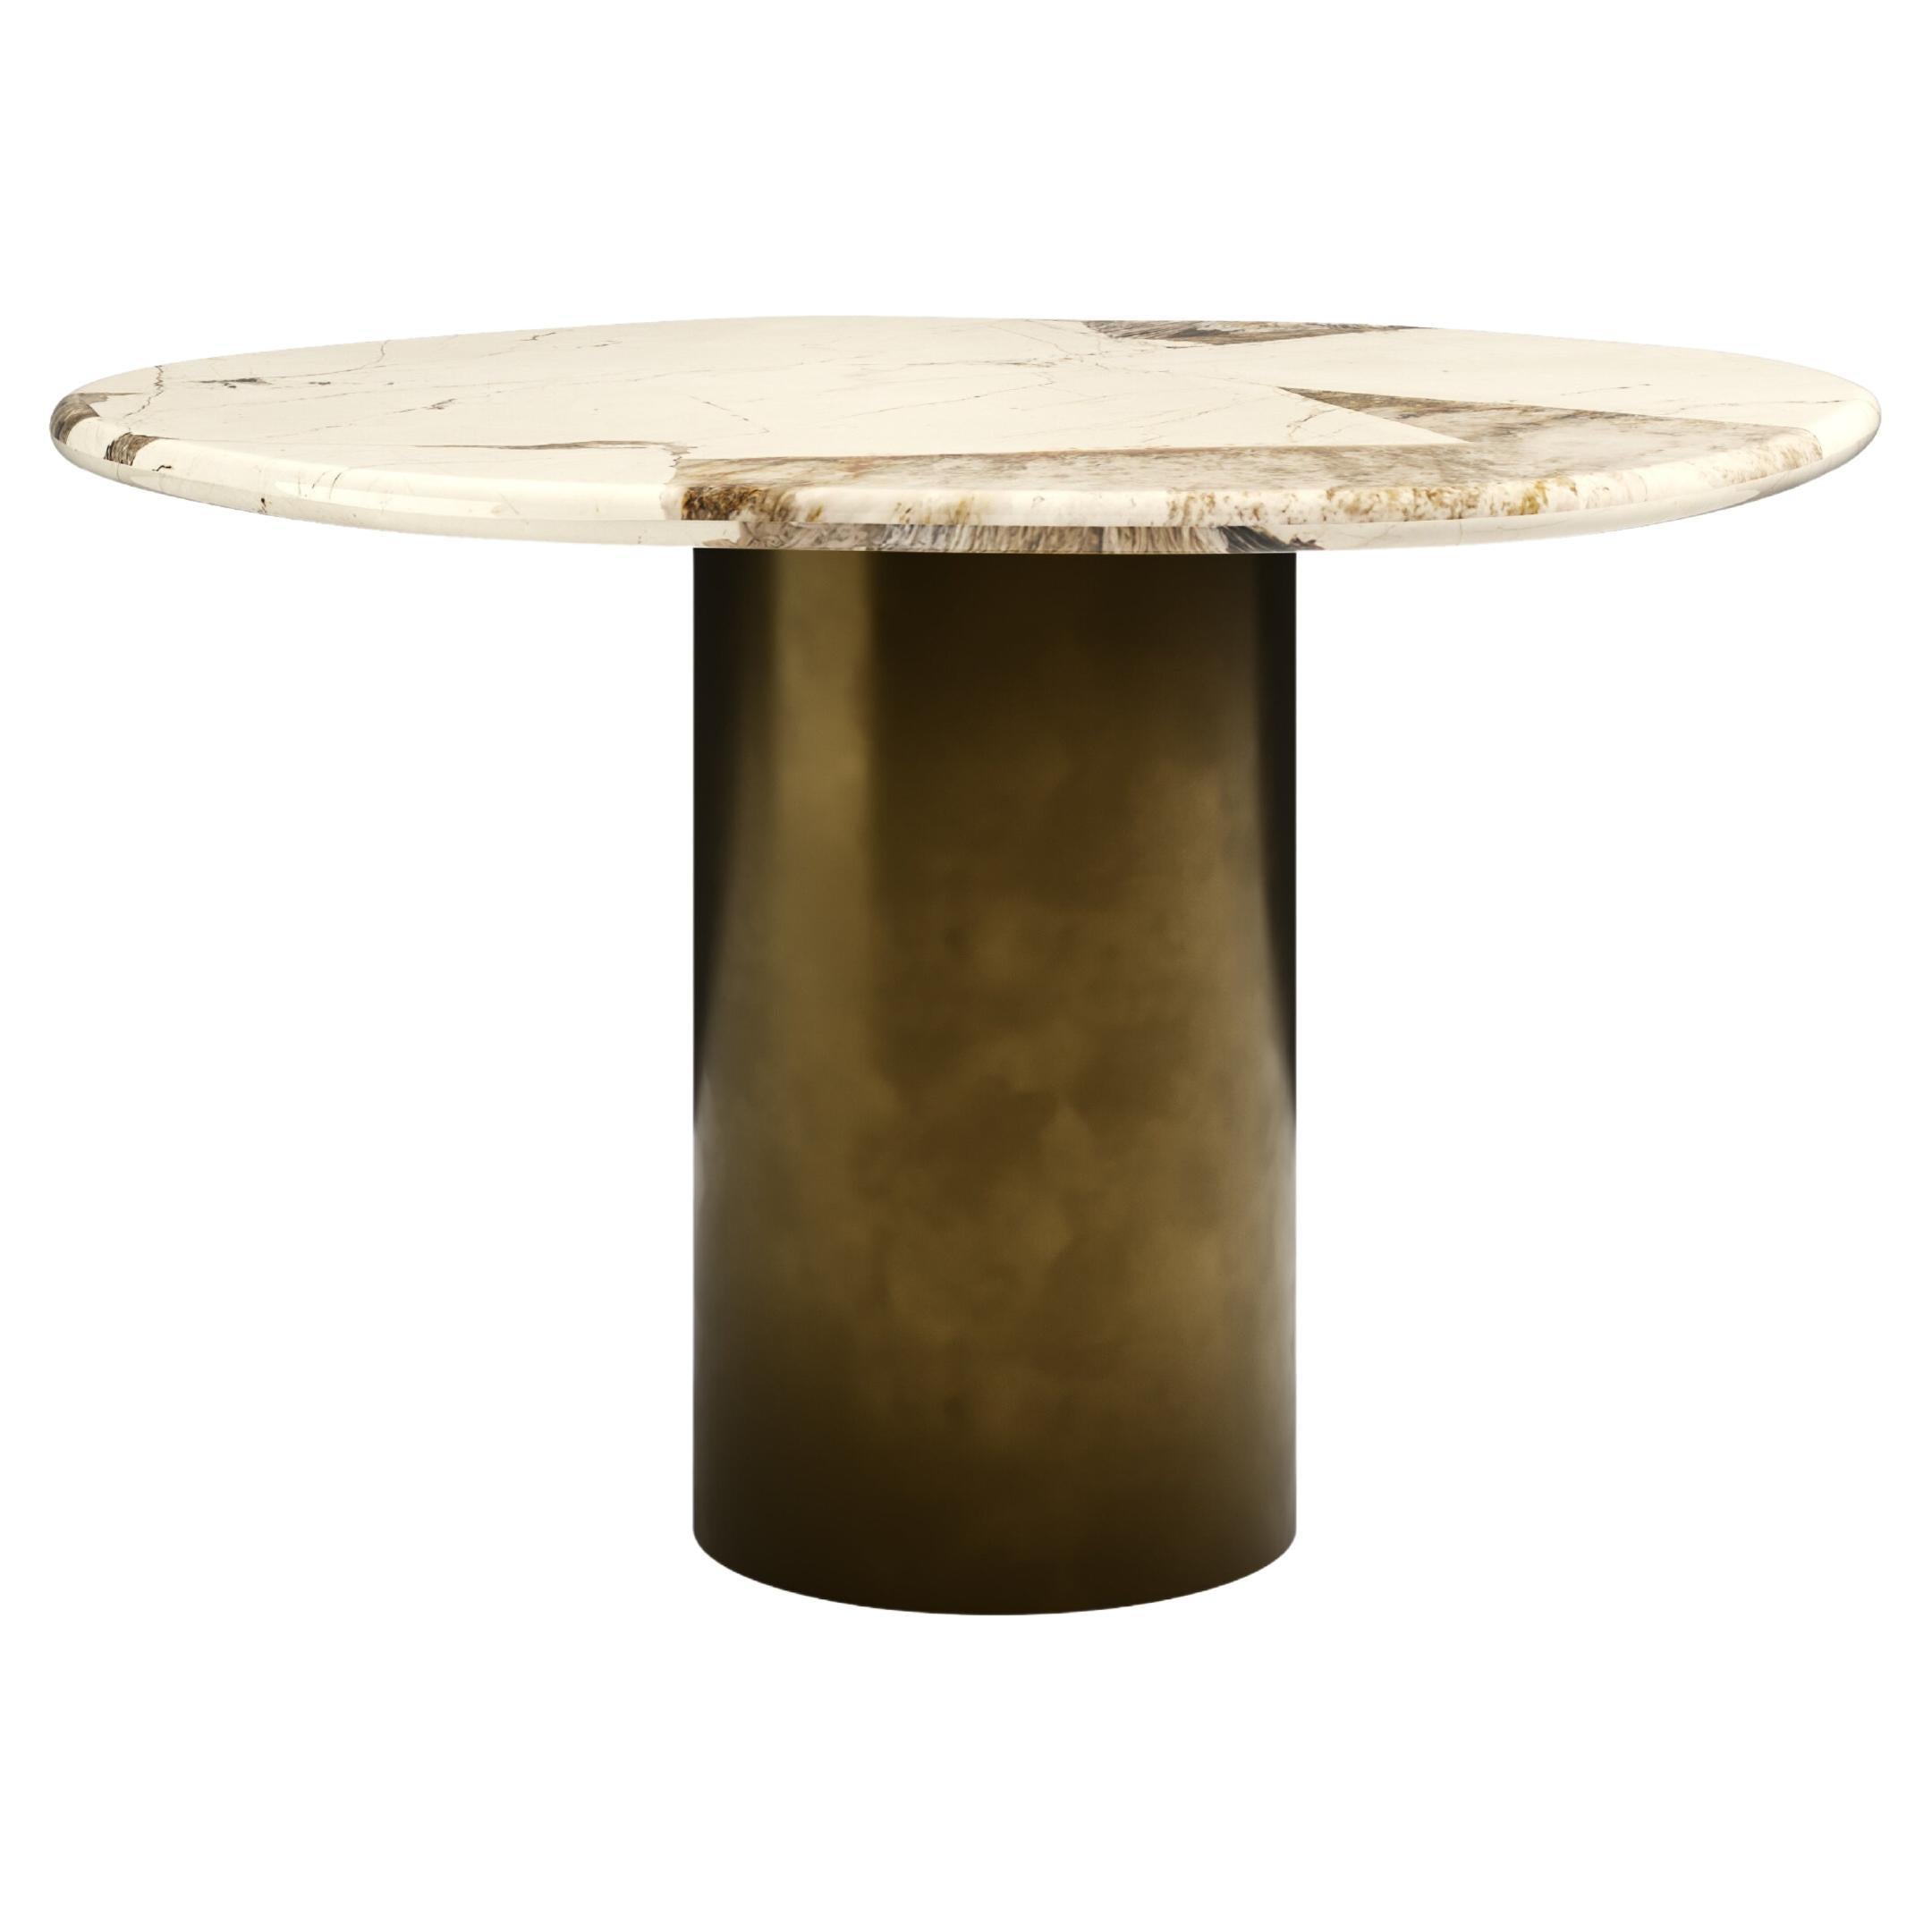 FORM(LA) Lago Round Dining Table 54”L x 54”W x 30”H Quartzite & Antique Bronze For Sale